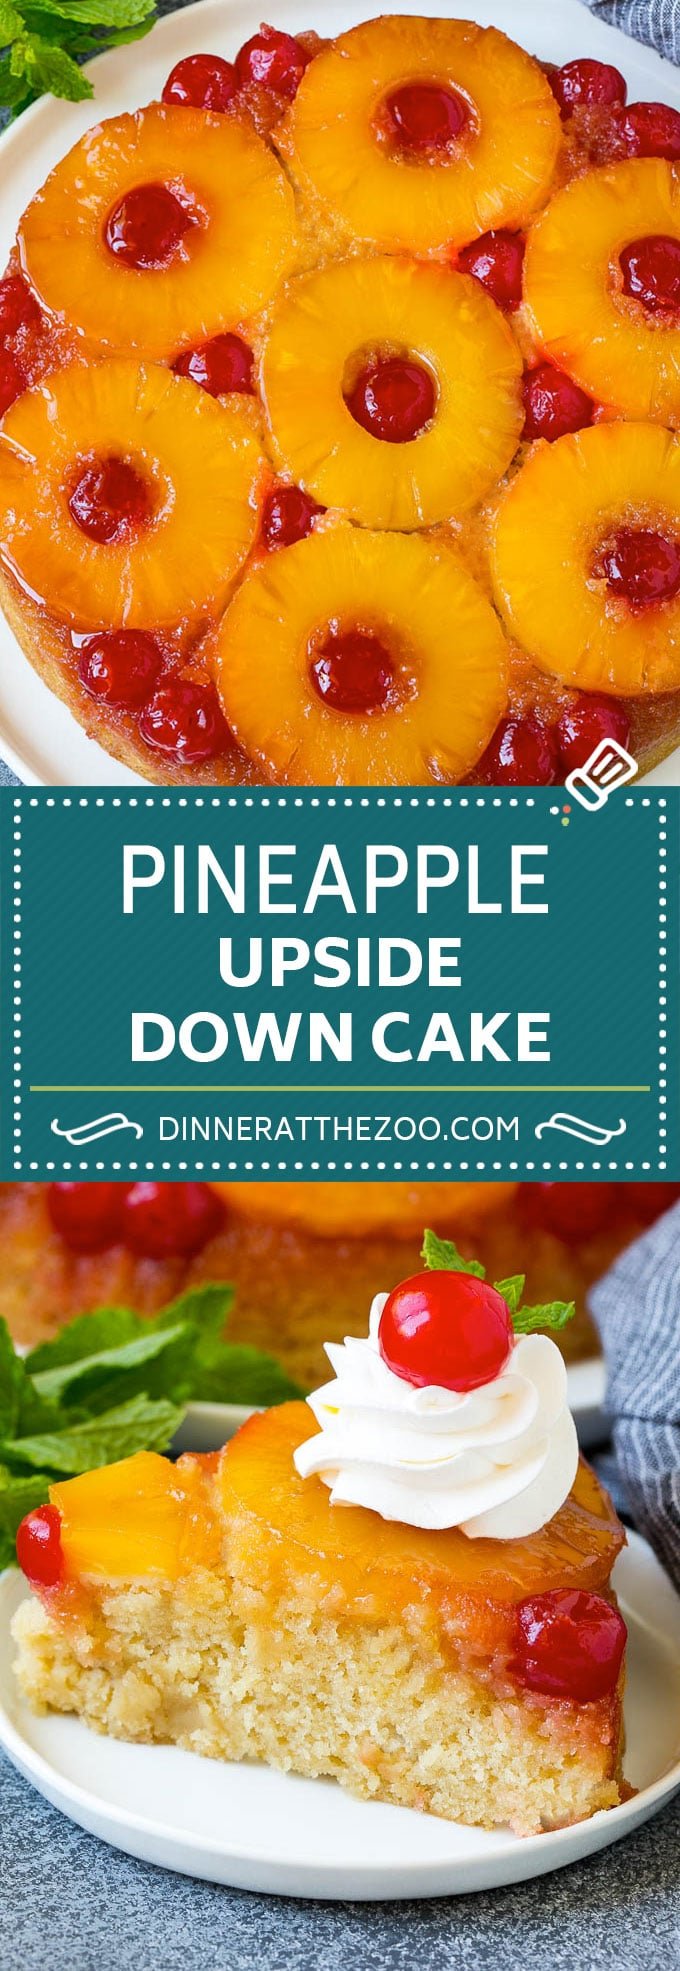 Pineapple Upside Down Cake | Pineapple Cake #cake #pineapple #dessert #cherries #dinneratthezoo